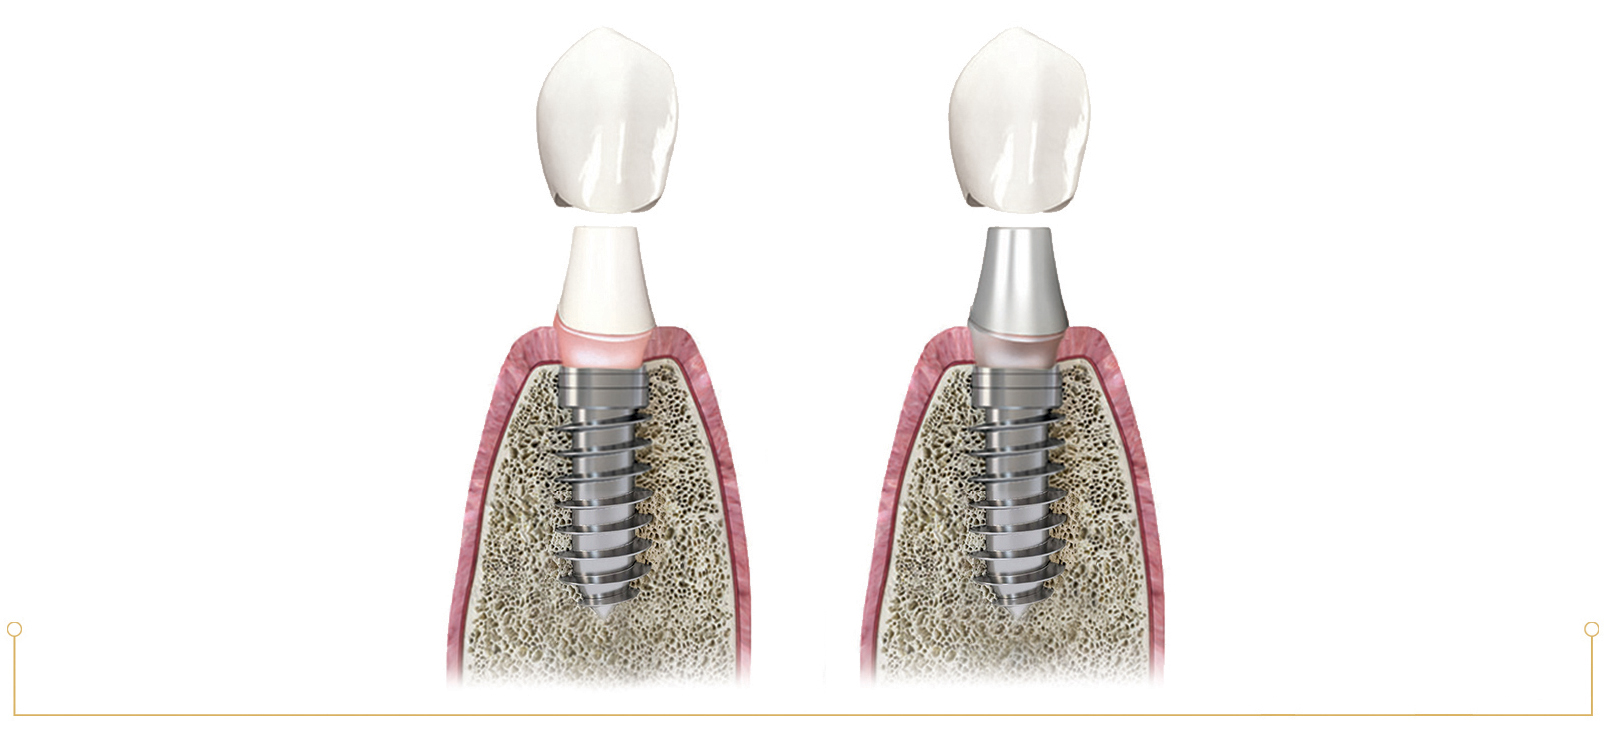 Зубы импланты поэтапно. Двухэтапная методика имплантации зубов. Двухэтапная имплантация зубов этапы. Этапы двухэтапной имплантации. Этапы имплантации зубов абатмент.